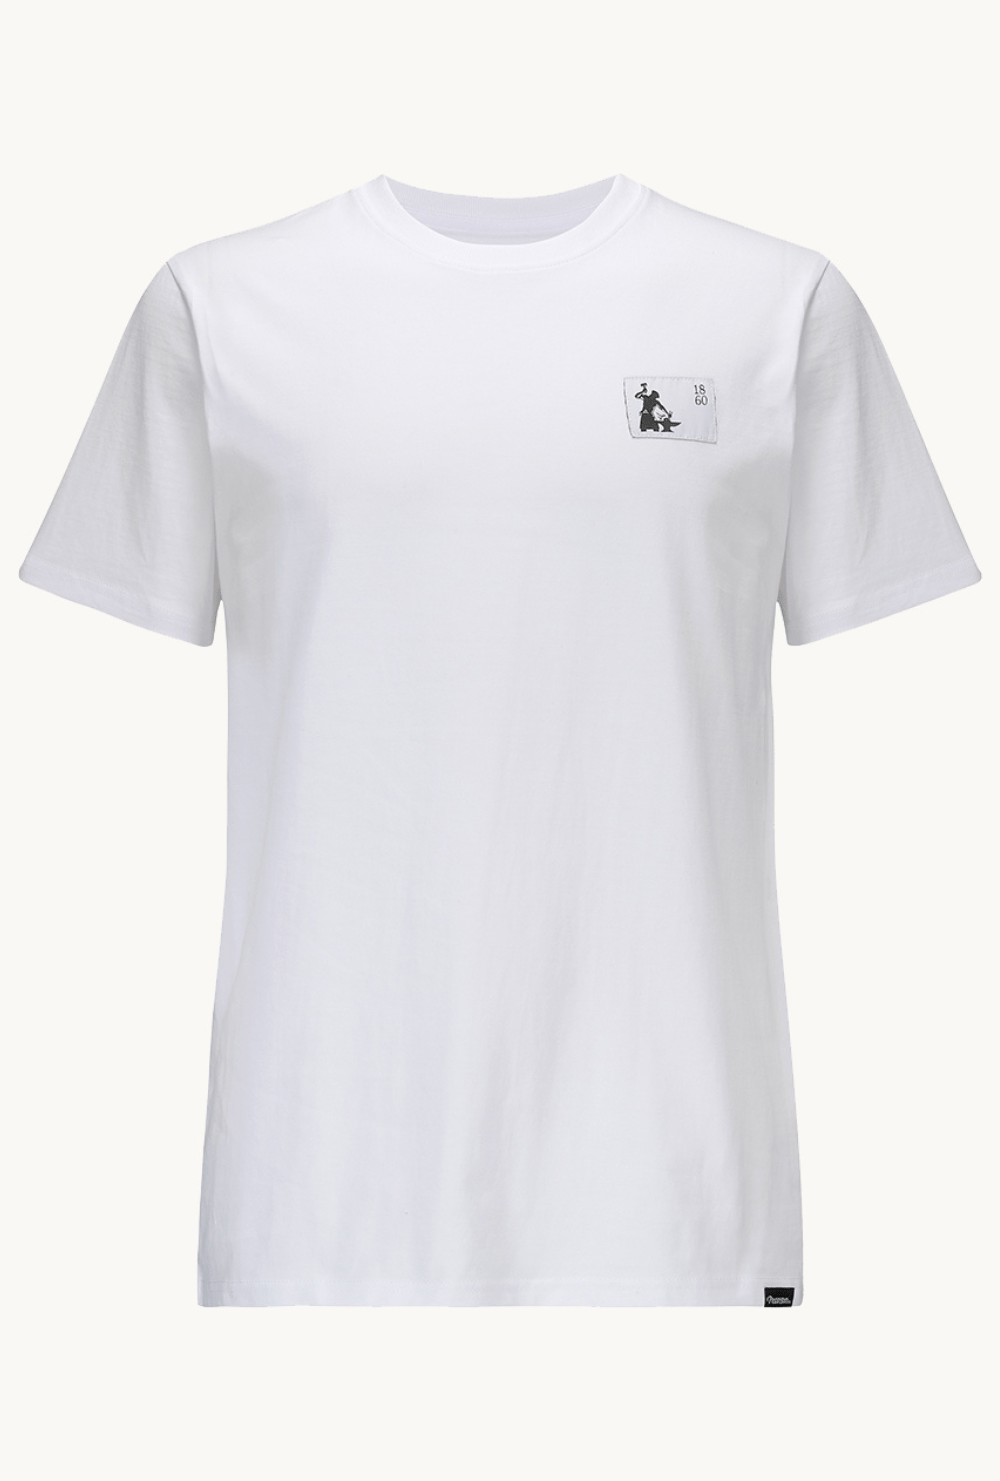 Pearson 1860  Put The Hammer Down - 100% Organic Cotton Unisex Cycling T-shirt White  Medium / White